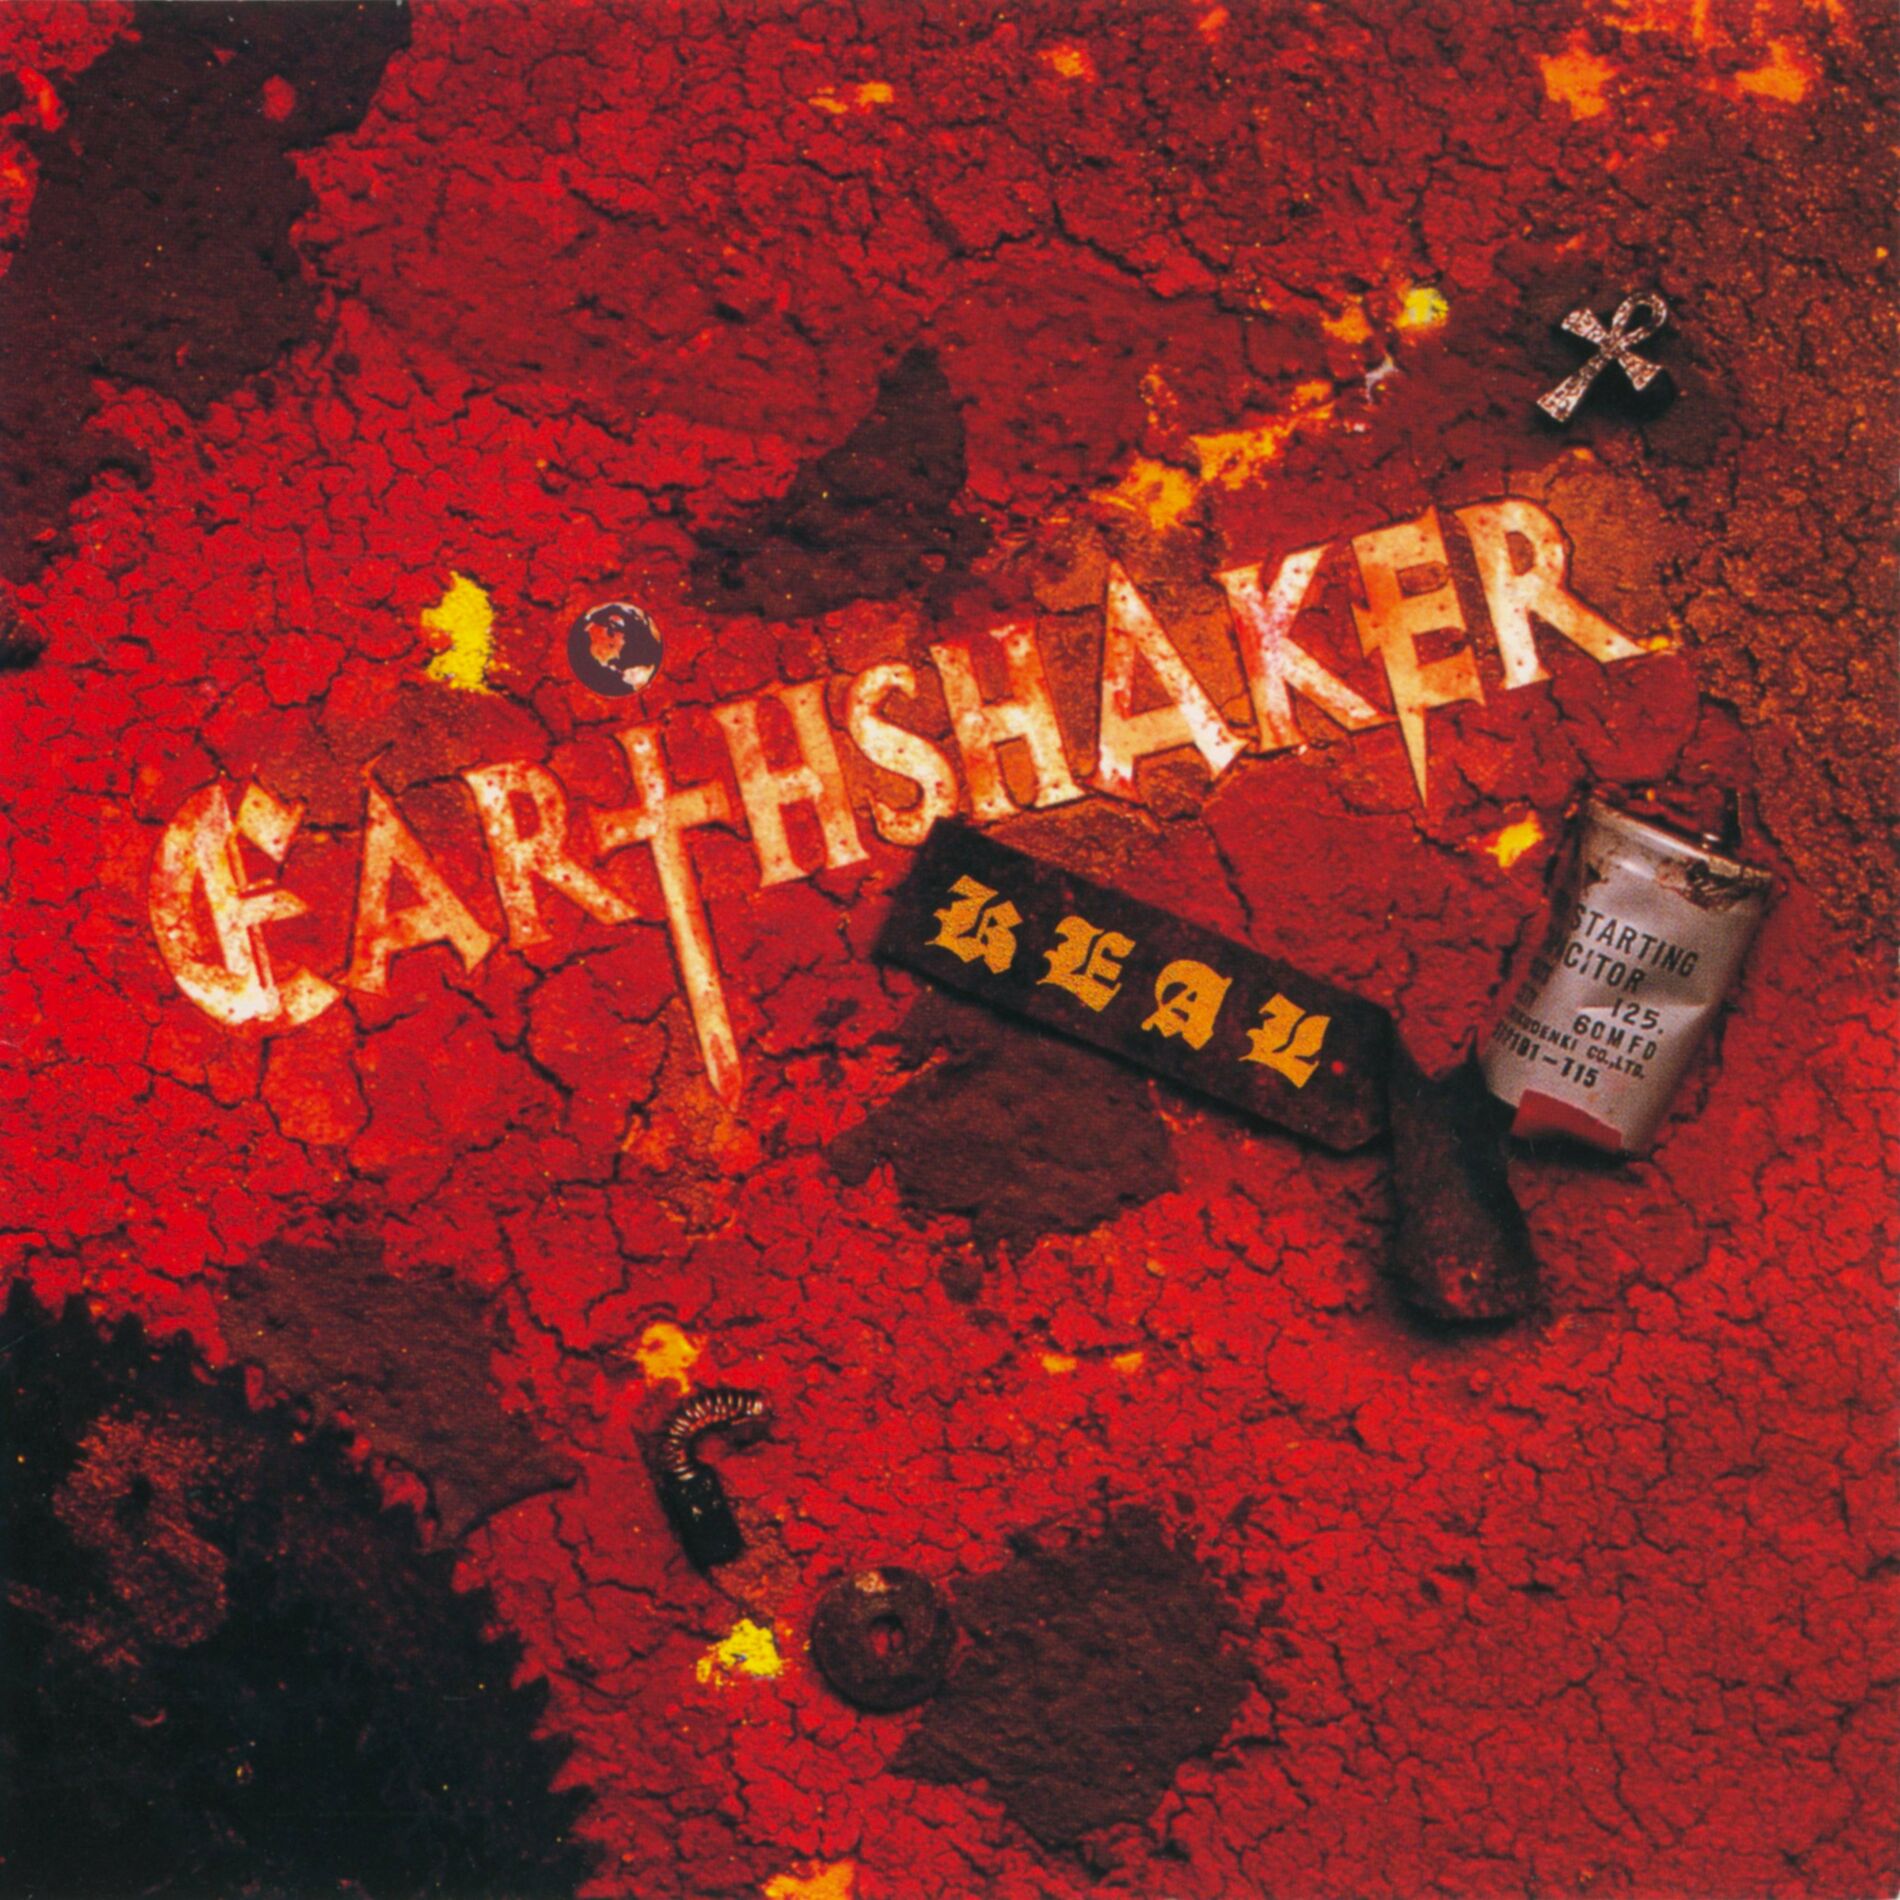 Earthshaker: albums